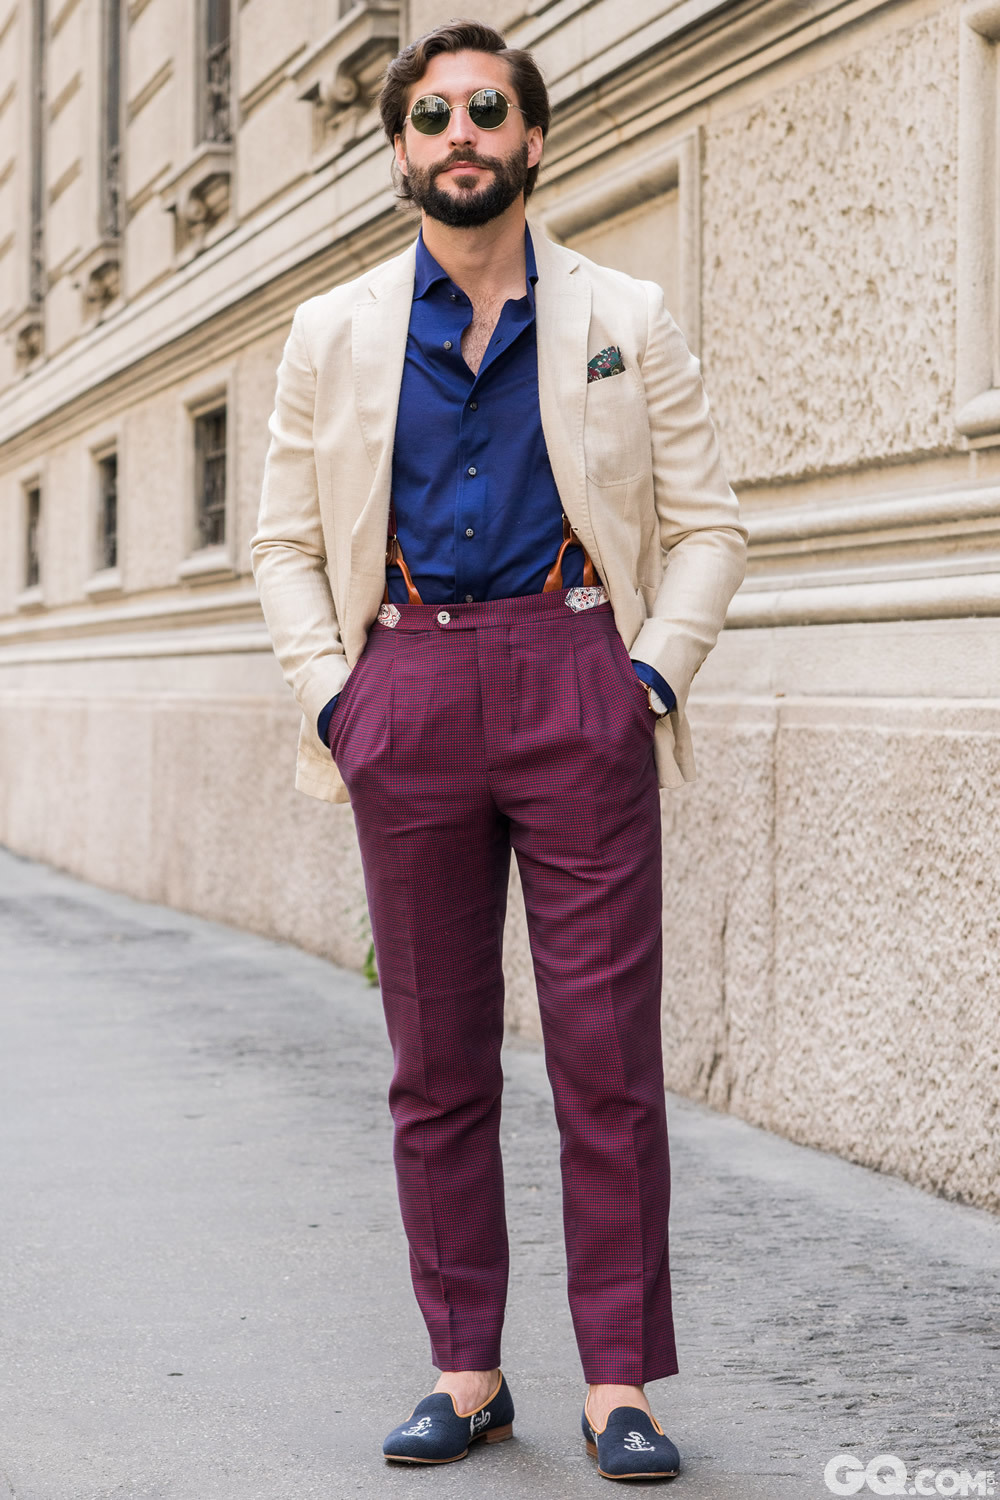 Suit: Sevena
Shoes: American Brand
Sunglasses: vintage

Inspiration: the perfect Italian Dandy!
（完美的意大利花花公子）